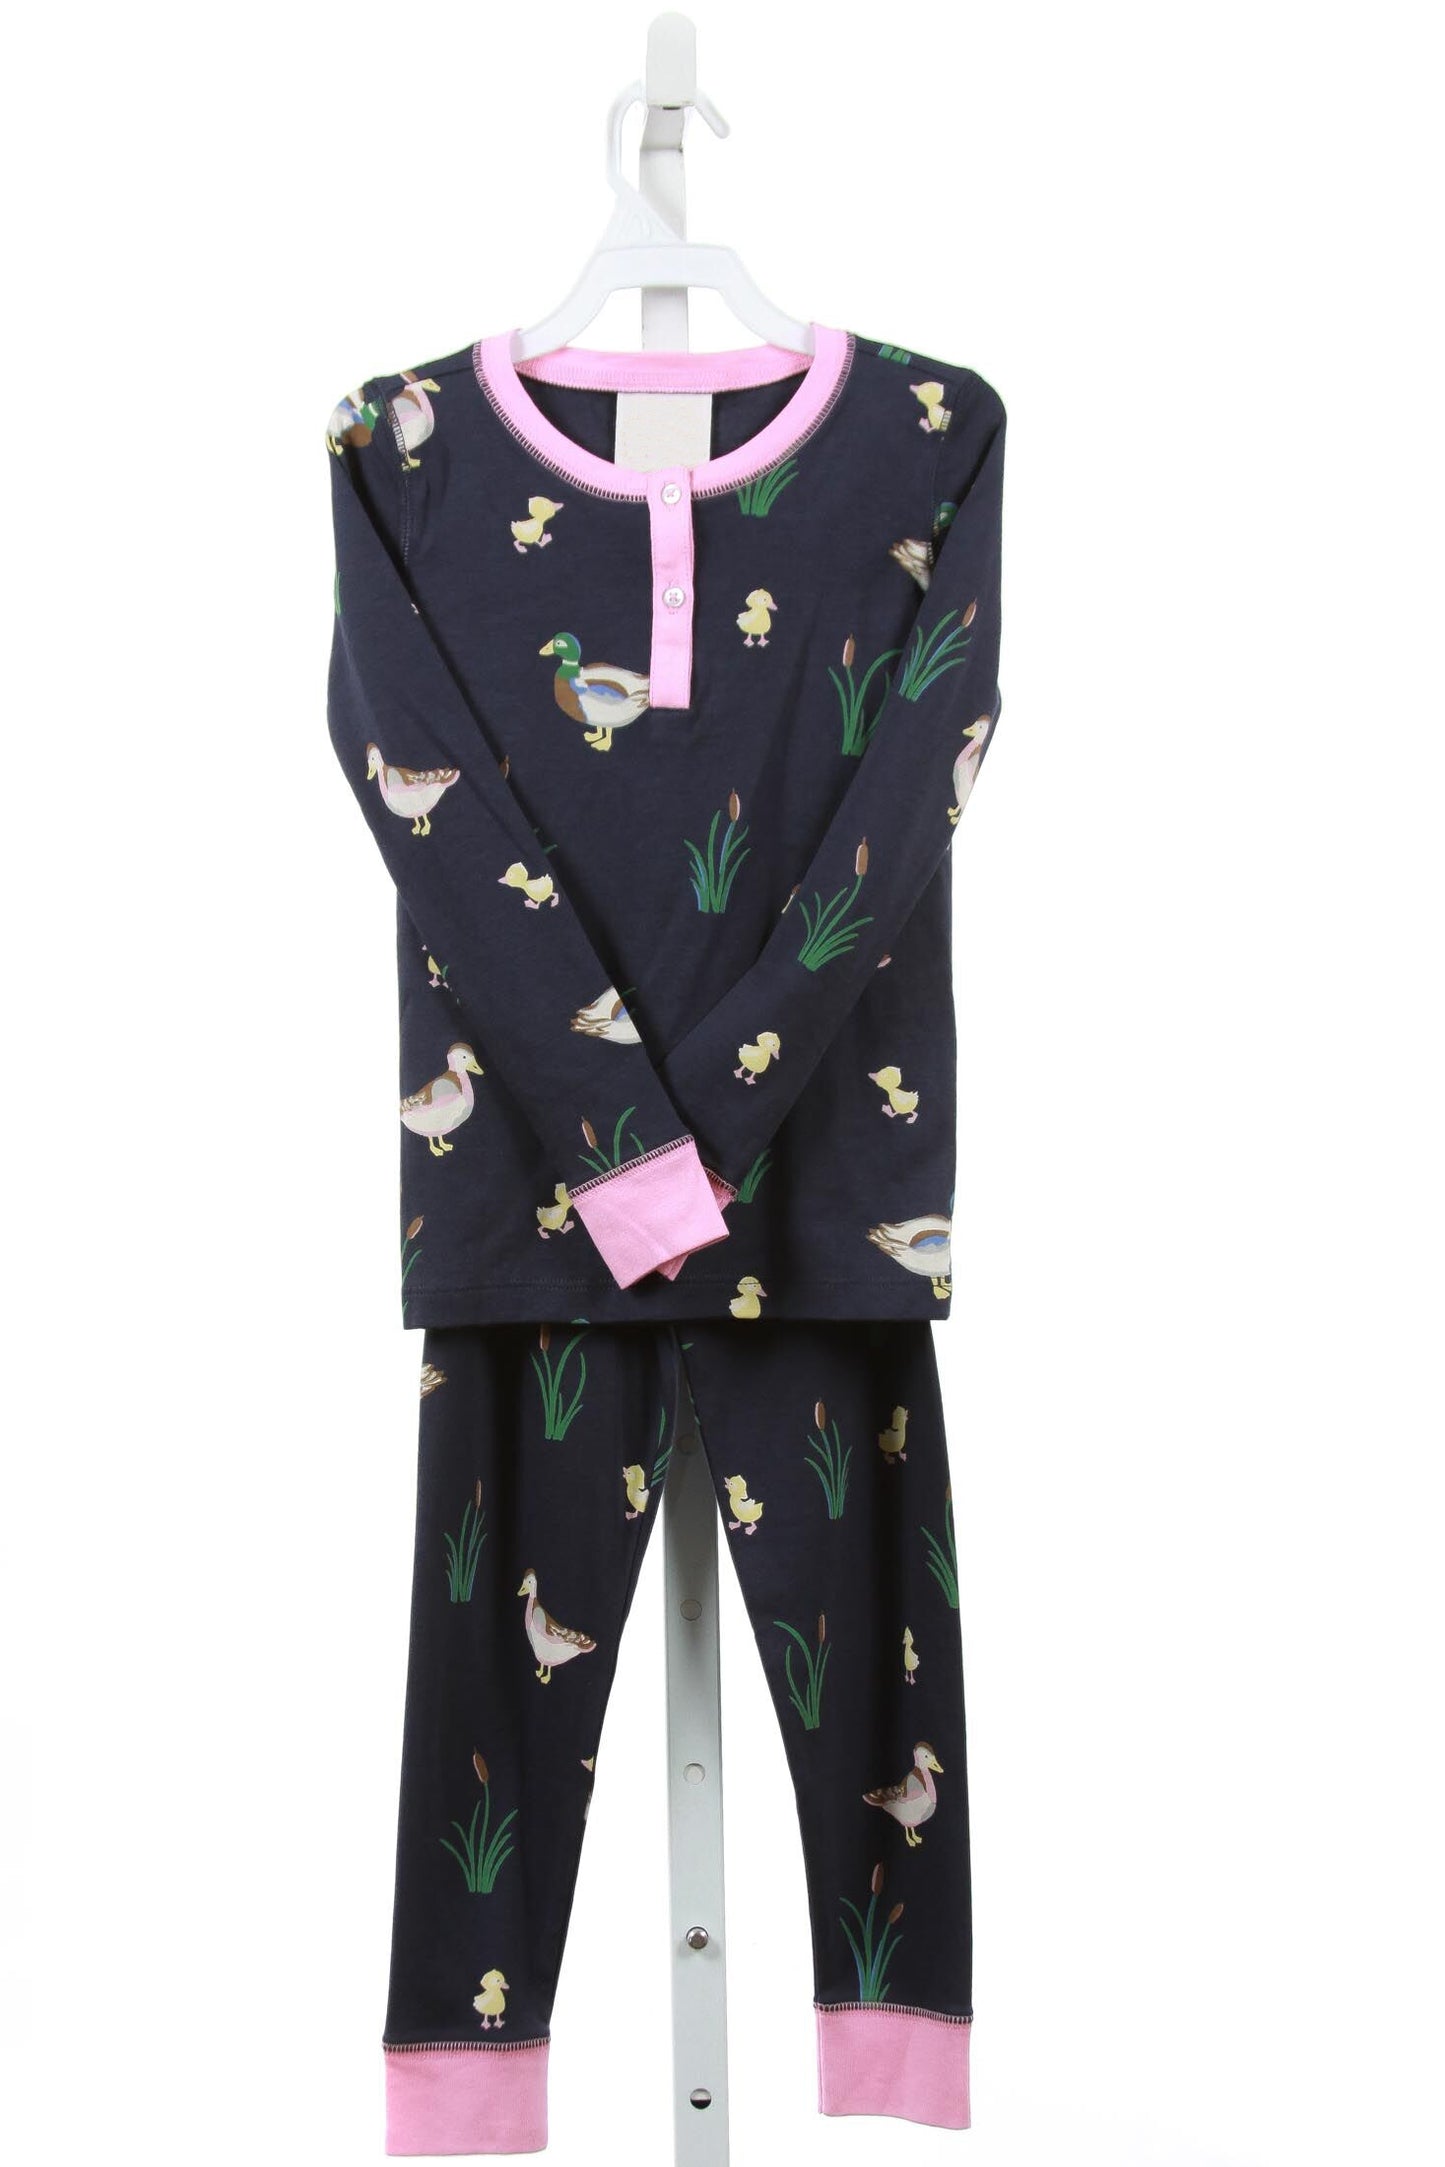 preorder GLP1216 mallard pink black long sleeve pants girls pajamas